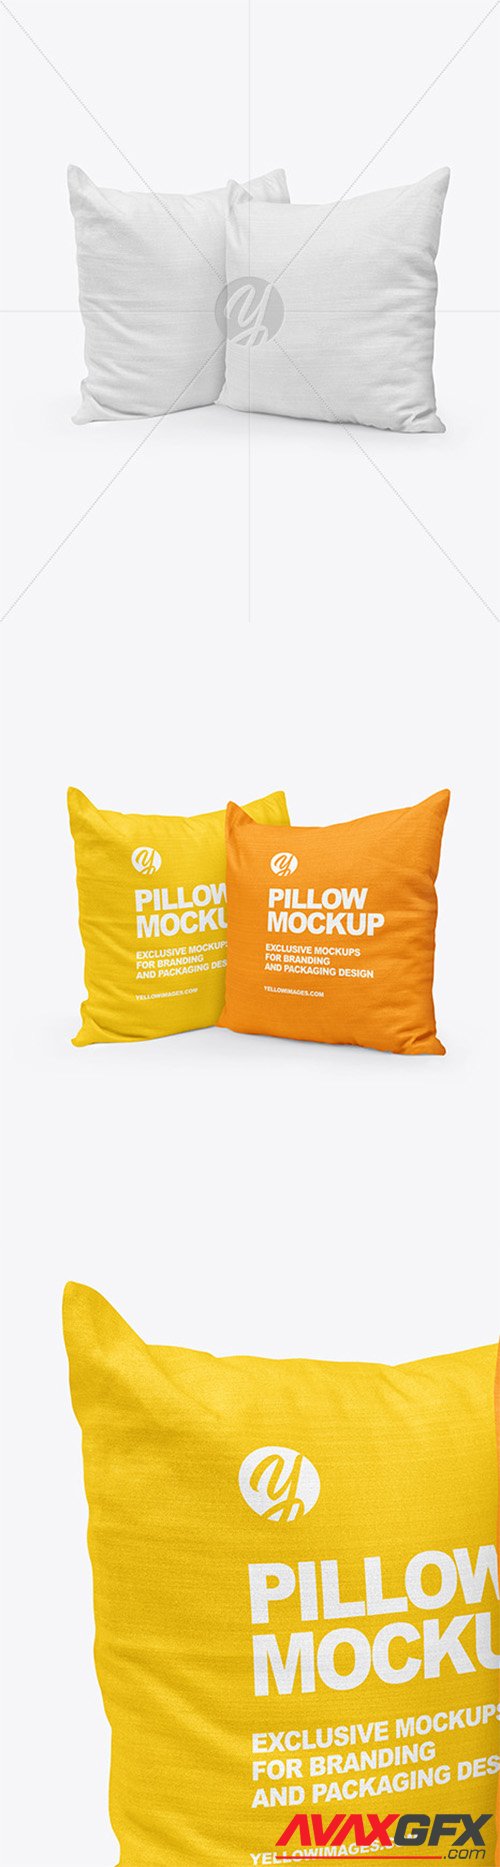 Two Pillows Mockup 66108